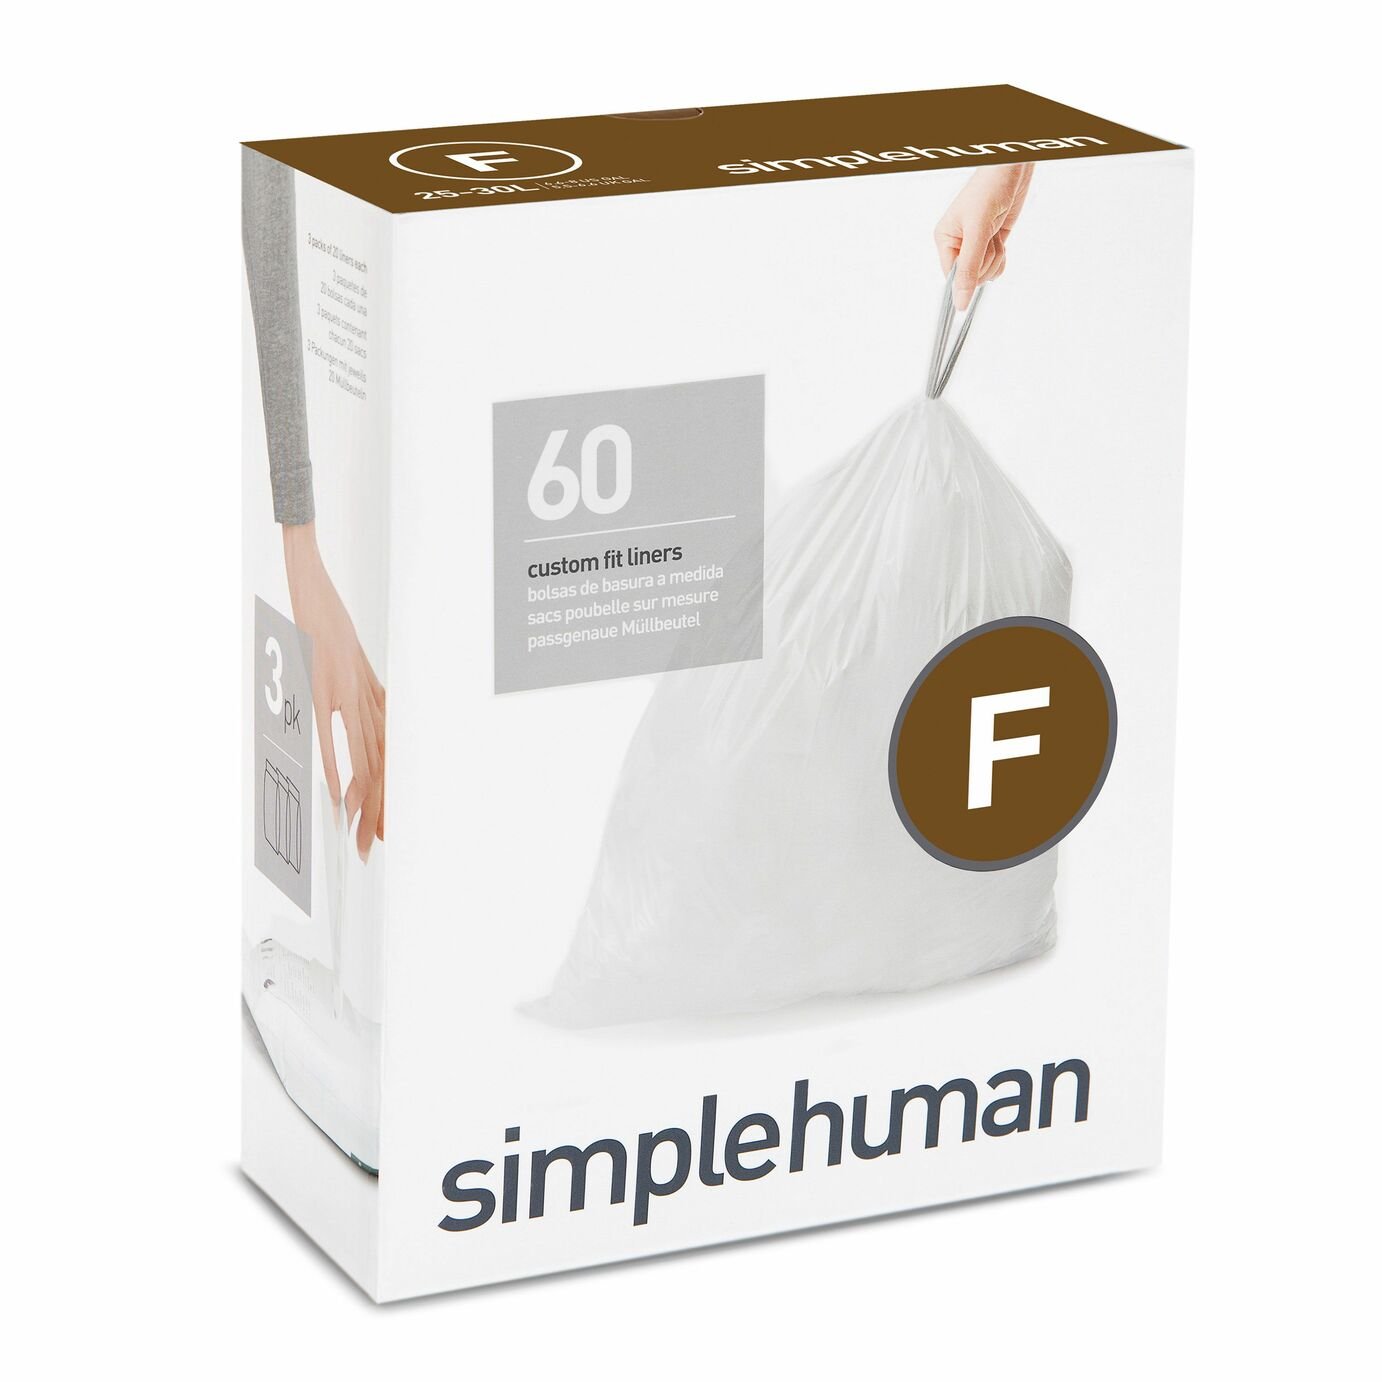 simplehuman Code F Bin Liners - Pack of 60